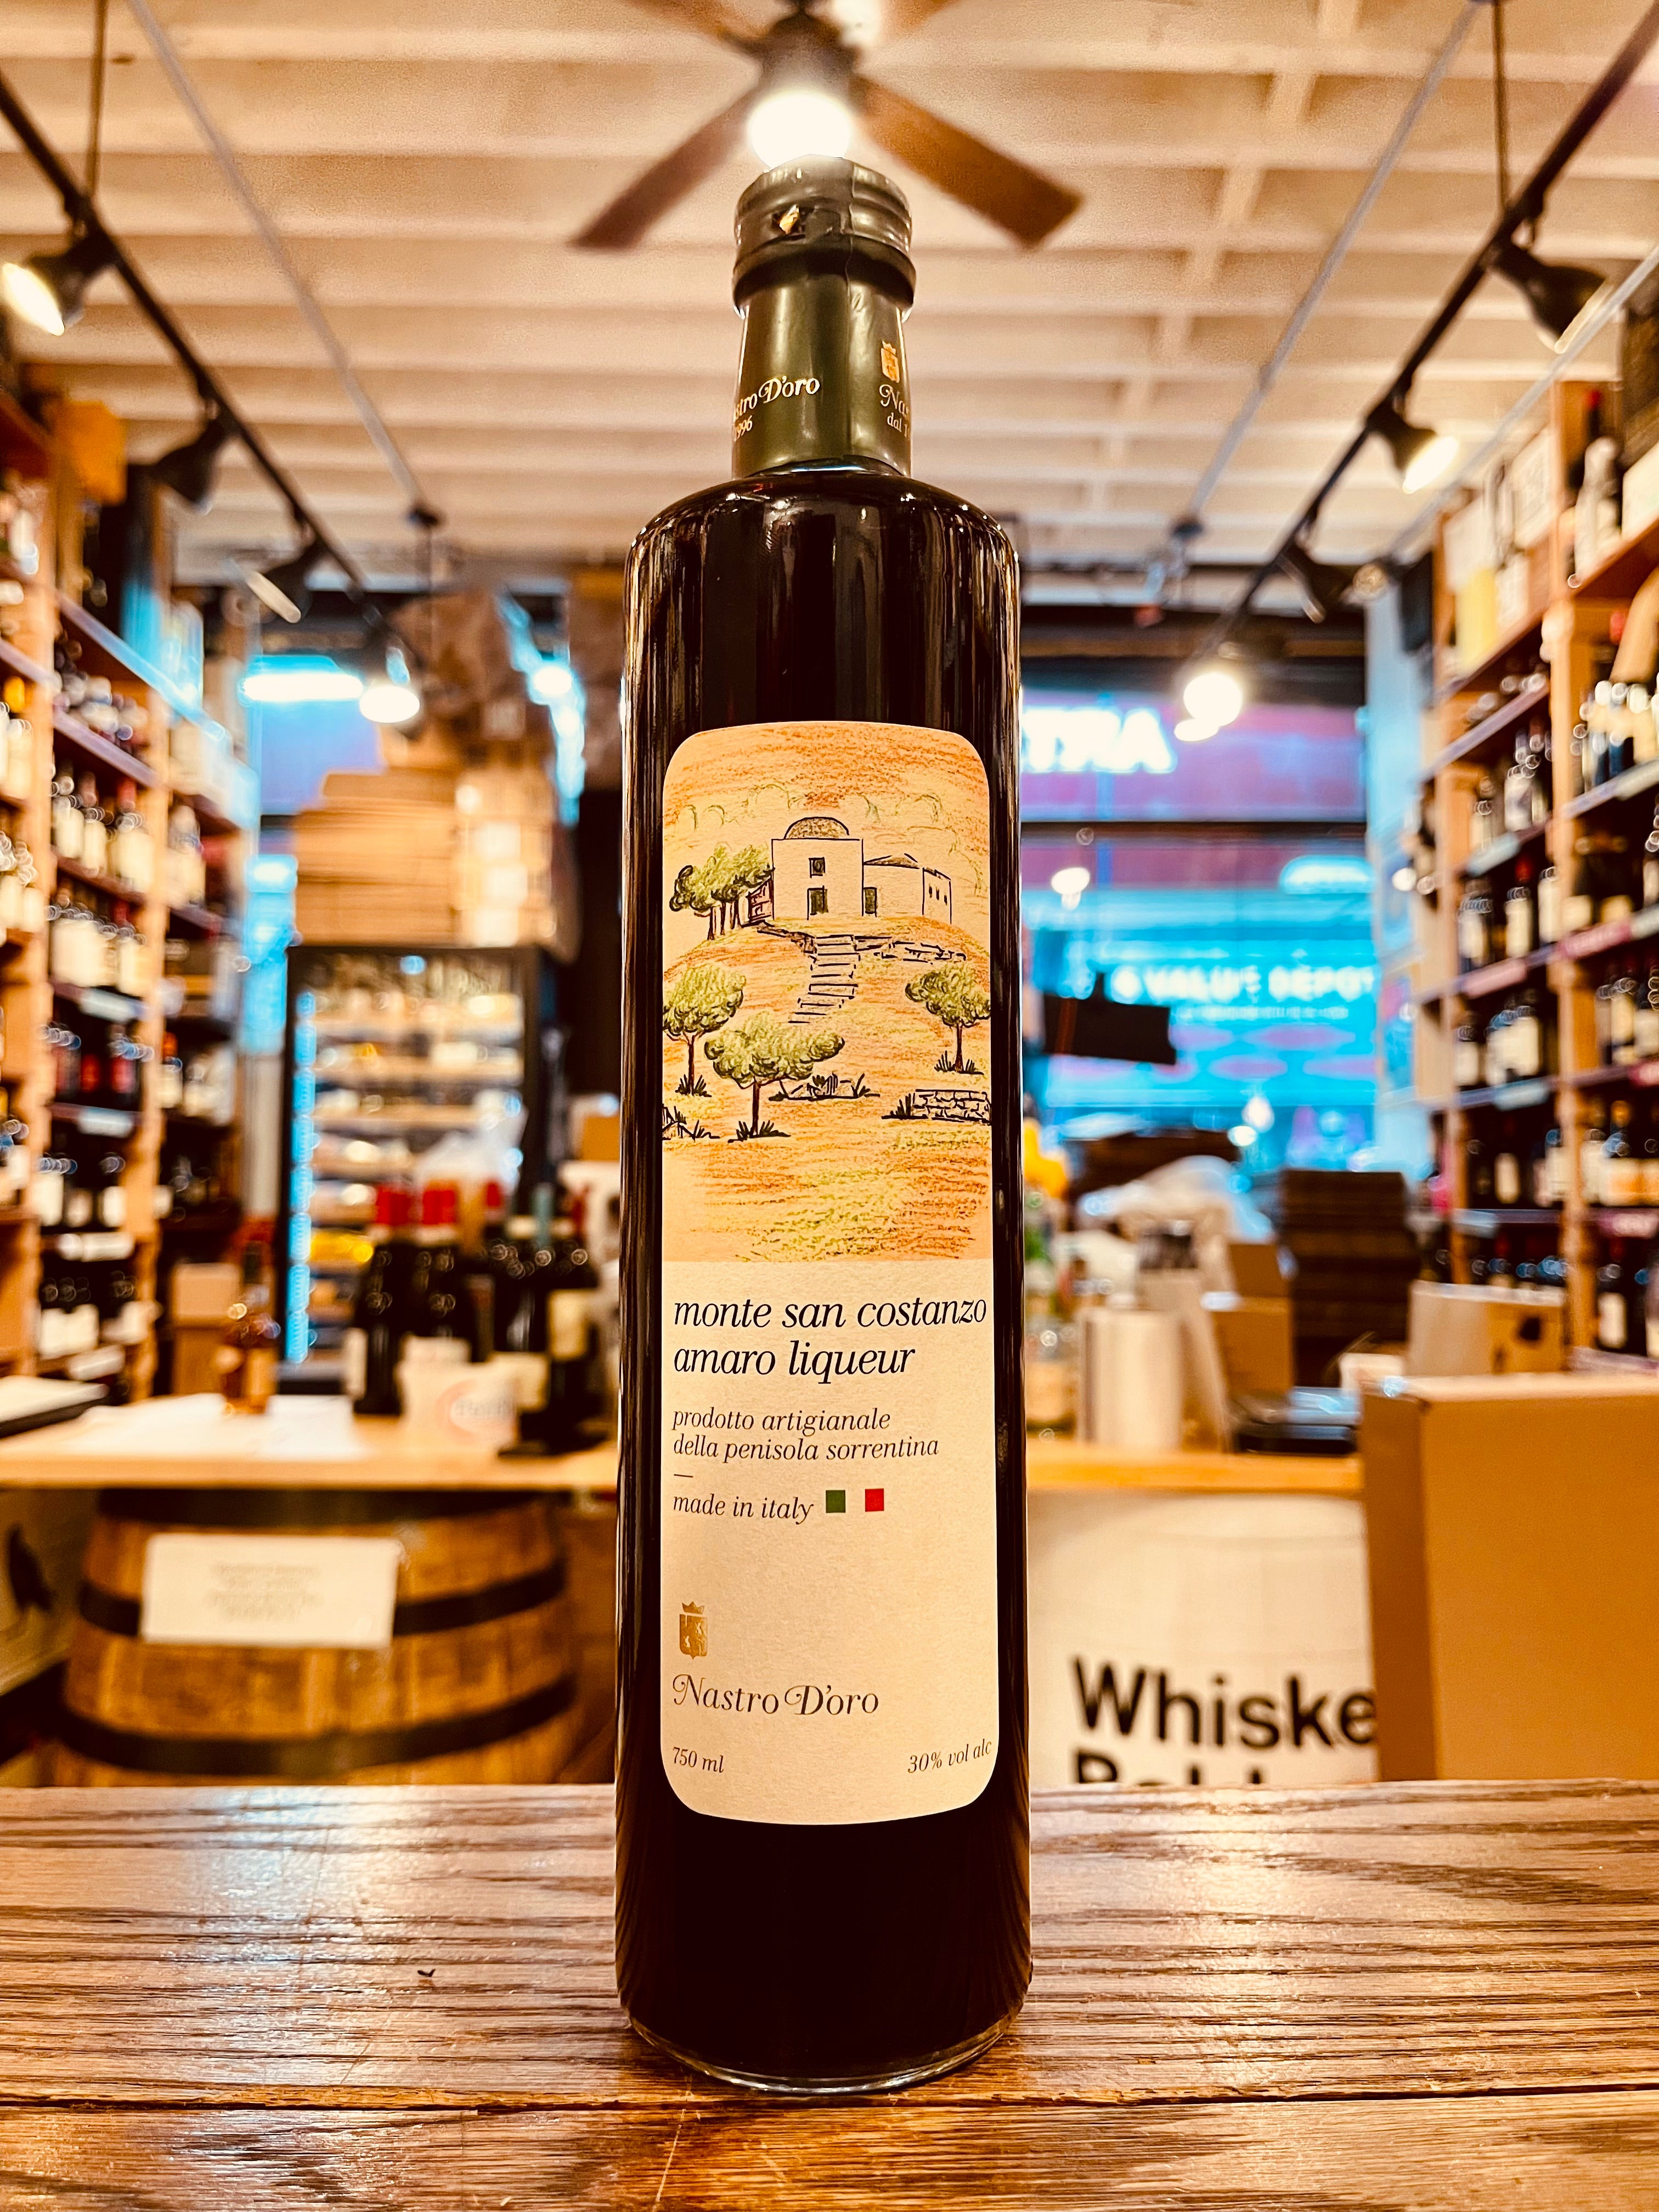 Amaro Monte San Costanzo Liqueuer 750mL tall elongated bottle with dark liquid and a white label